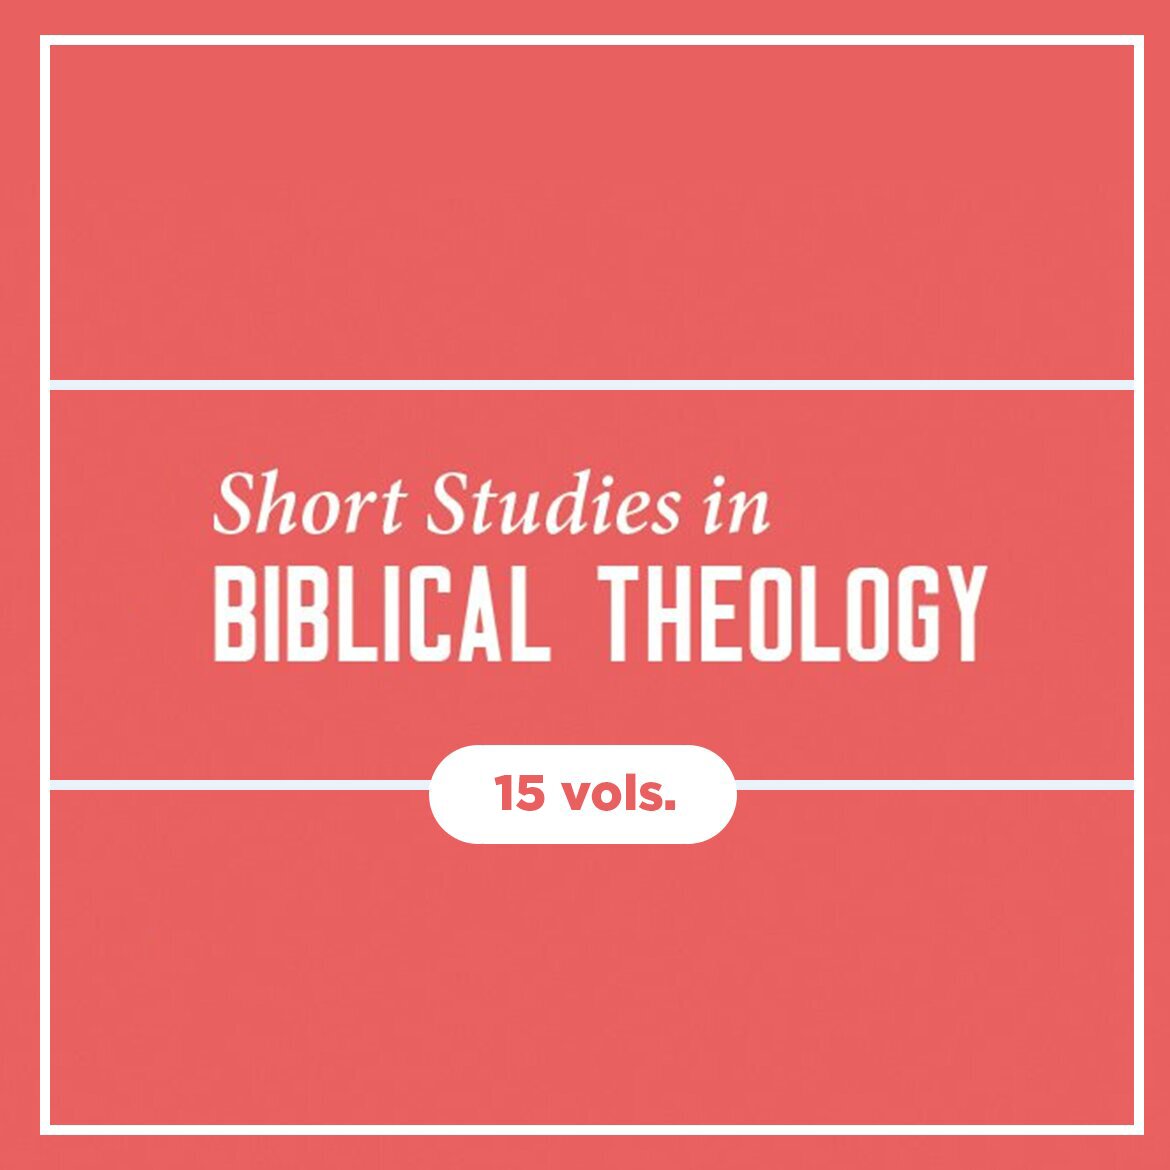 Short Studies in Biblical Theology (15 vols.)